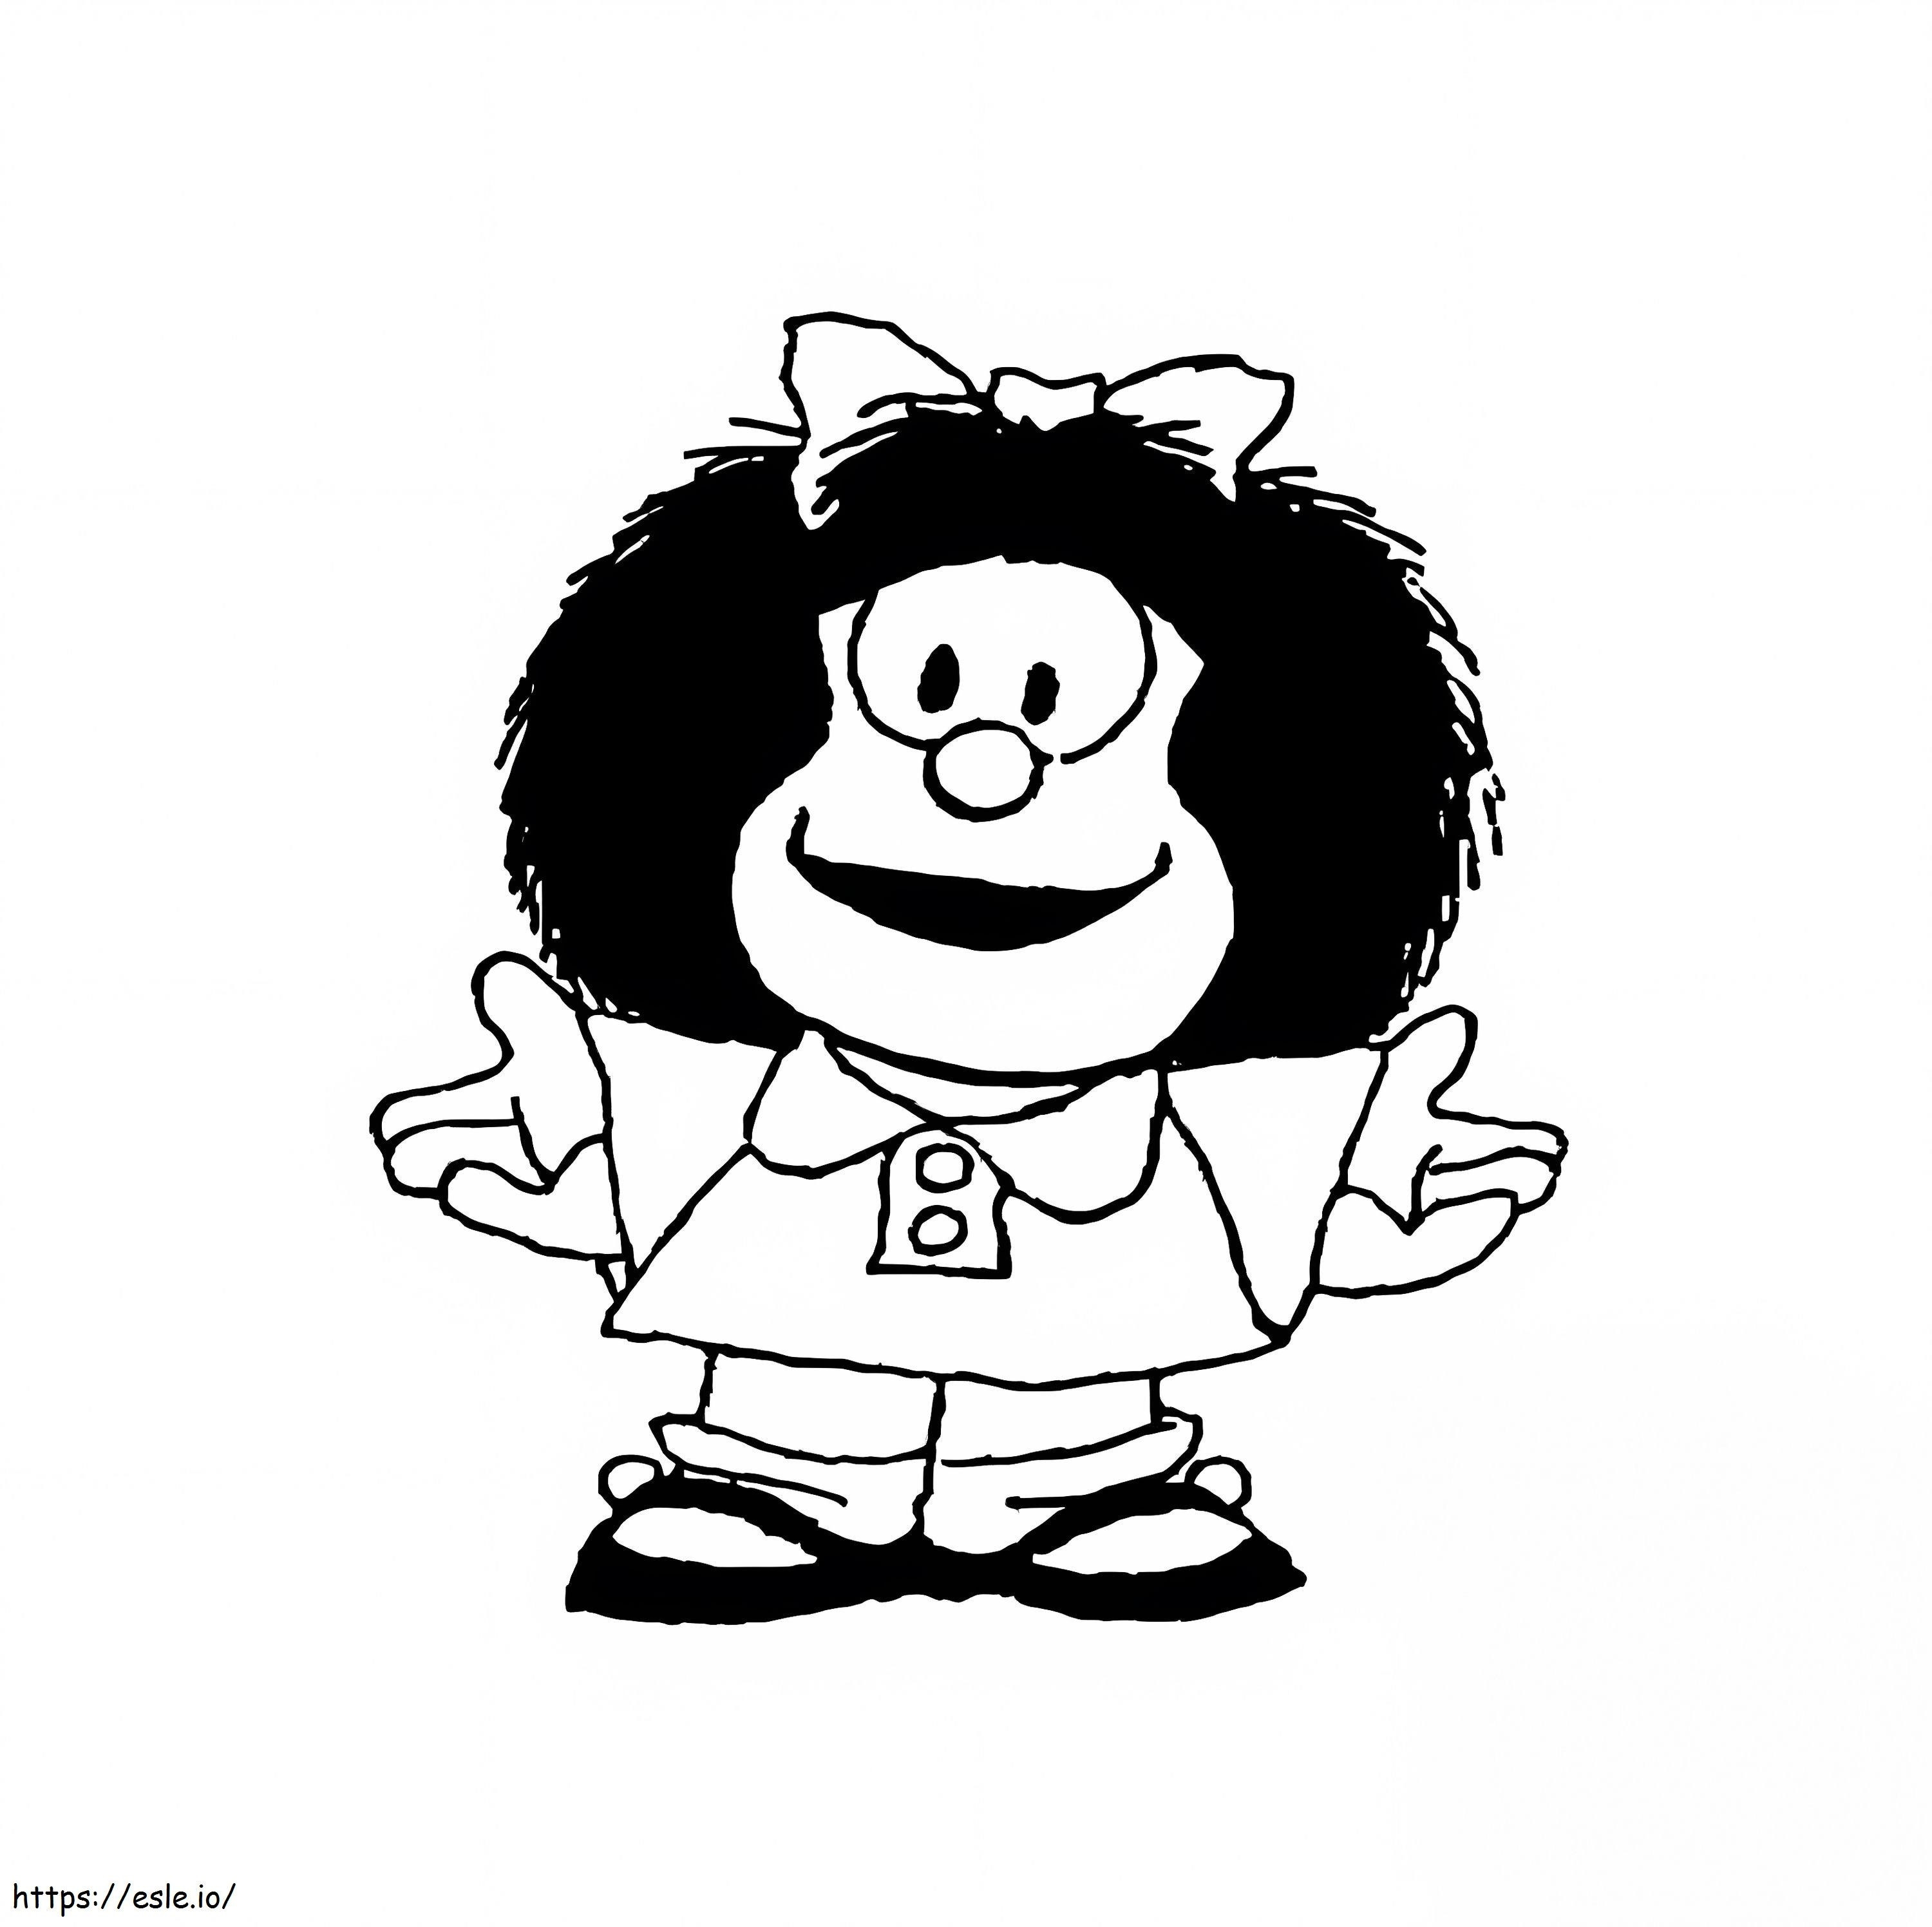 Mafalda kleurplaat kleurplaat